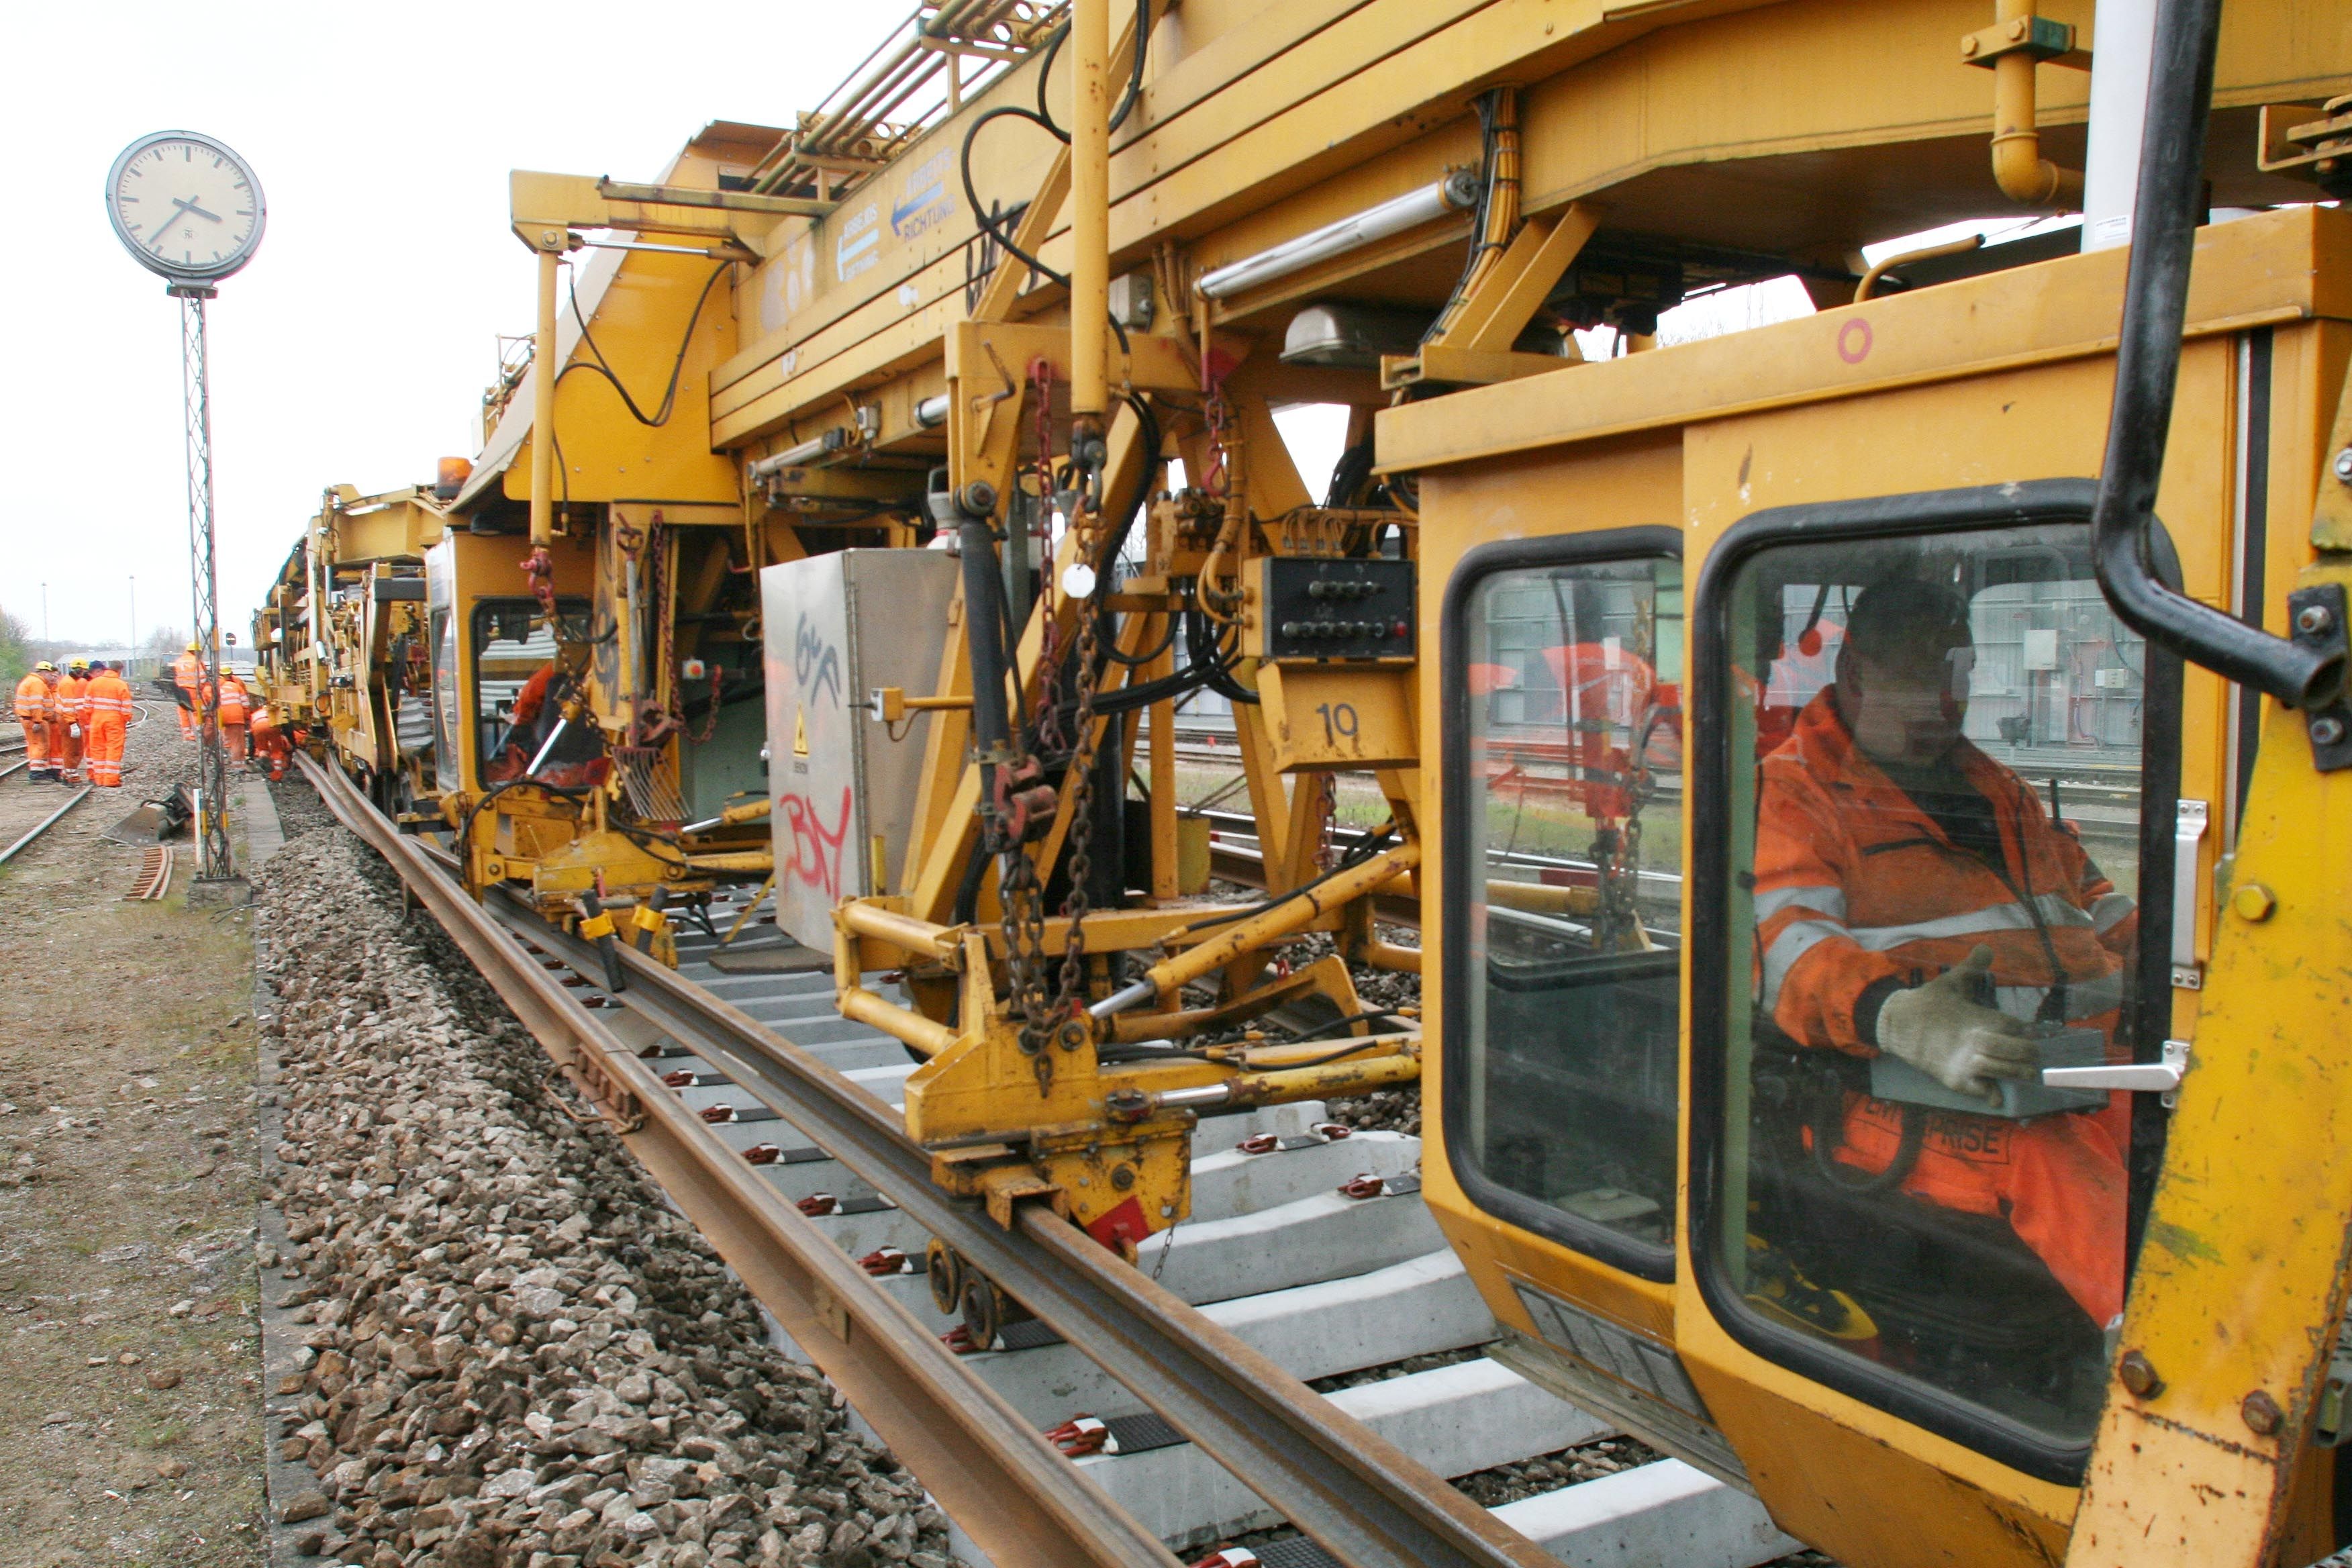 Rail work to impact on train traffic next month